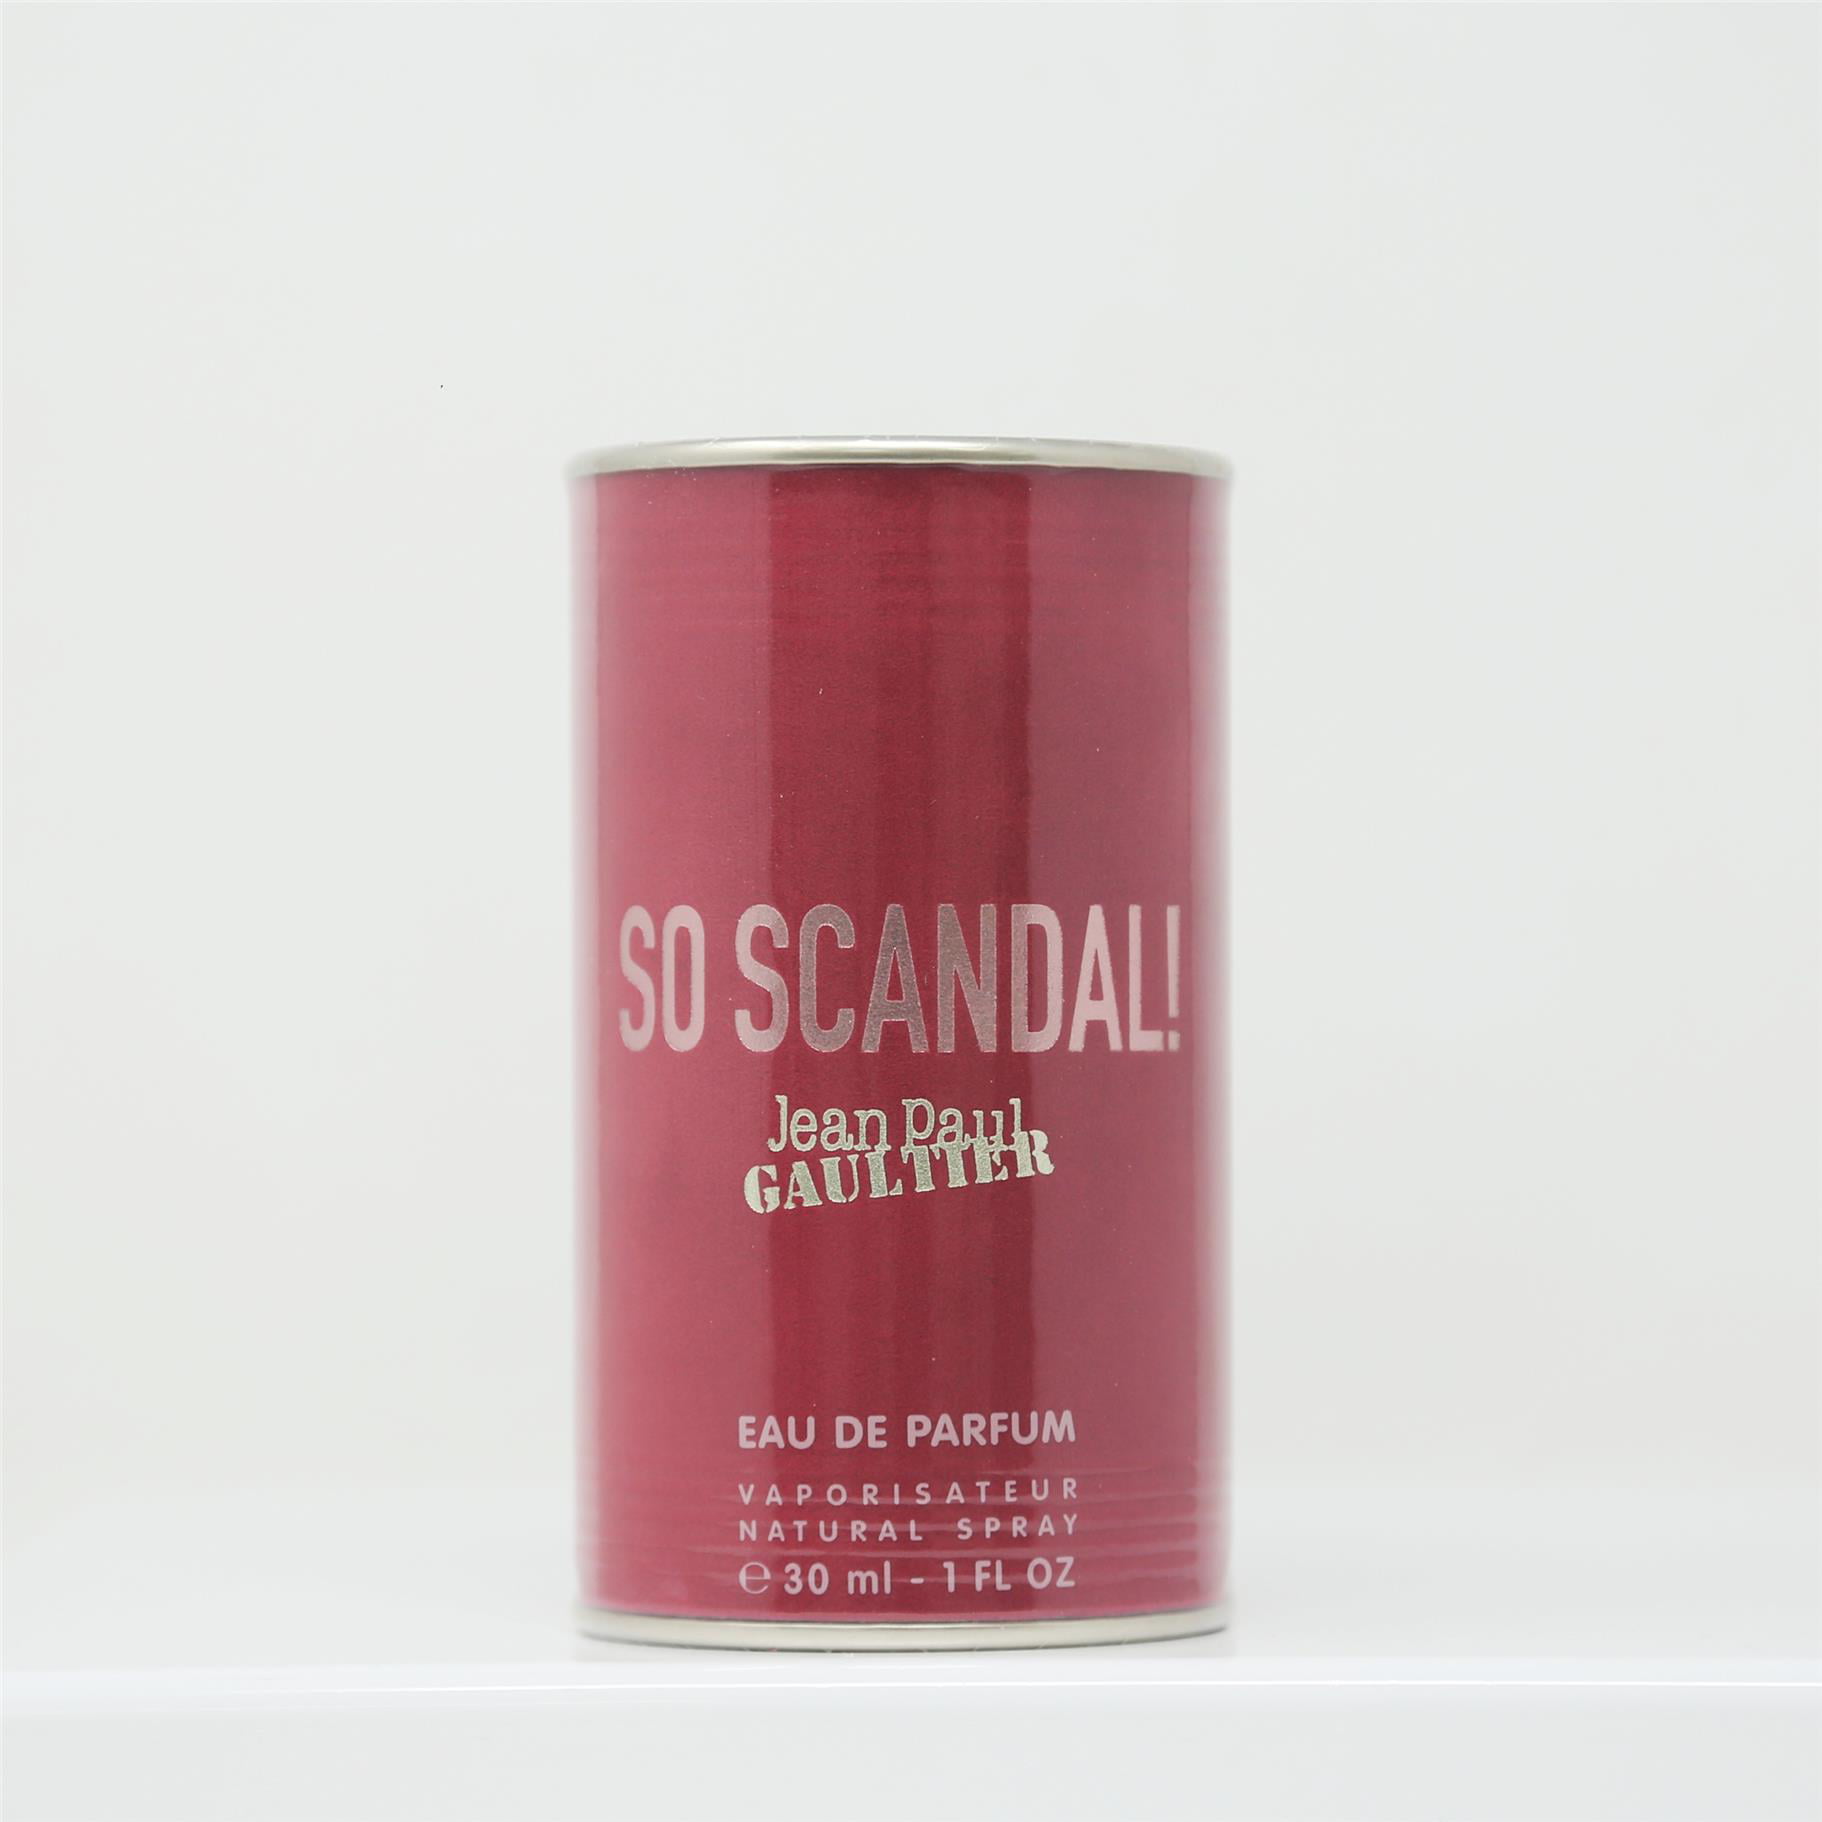 So Scandal! by Jean Paul Gaultier for Women 1.0 oz Eau de Parfum Spray